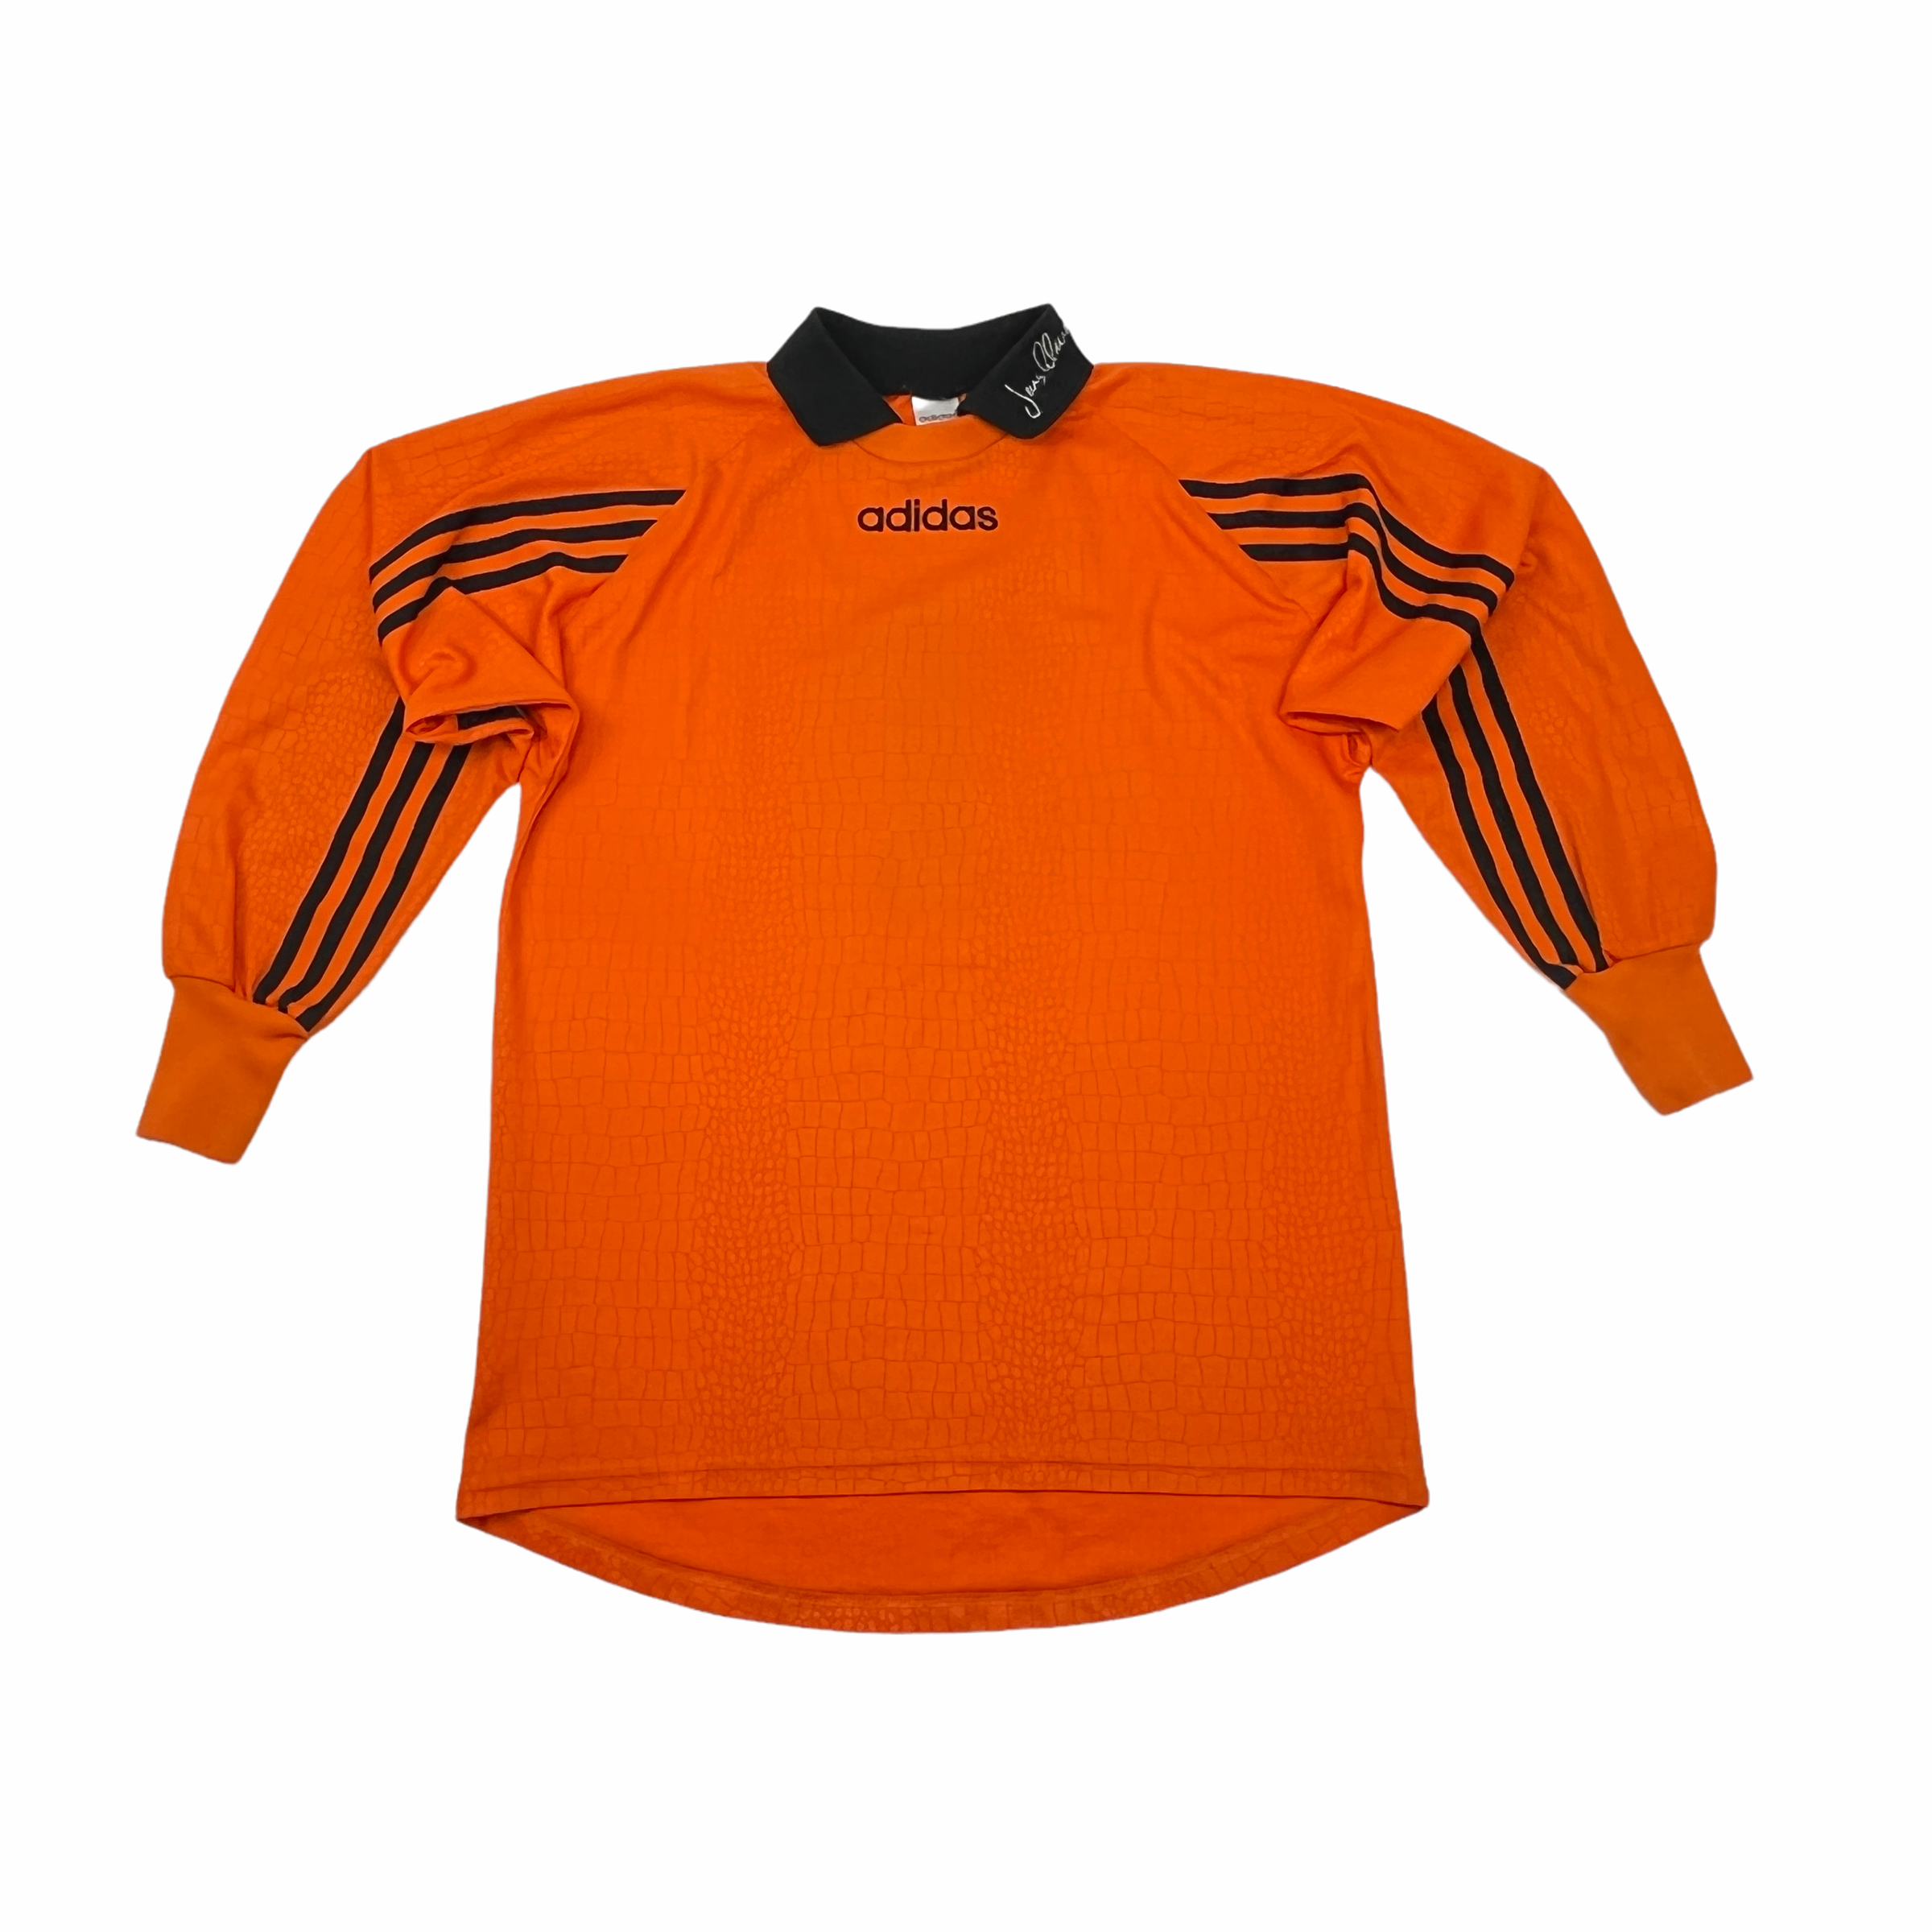 Adidas Jersey Adidas Shirt Vintage Adidas Goalkeeper Shirt